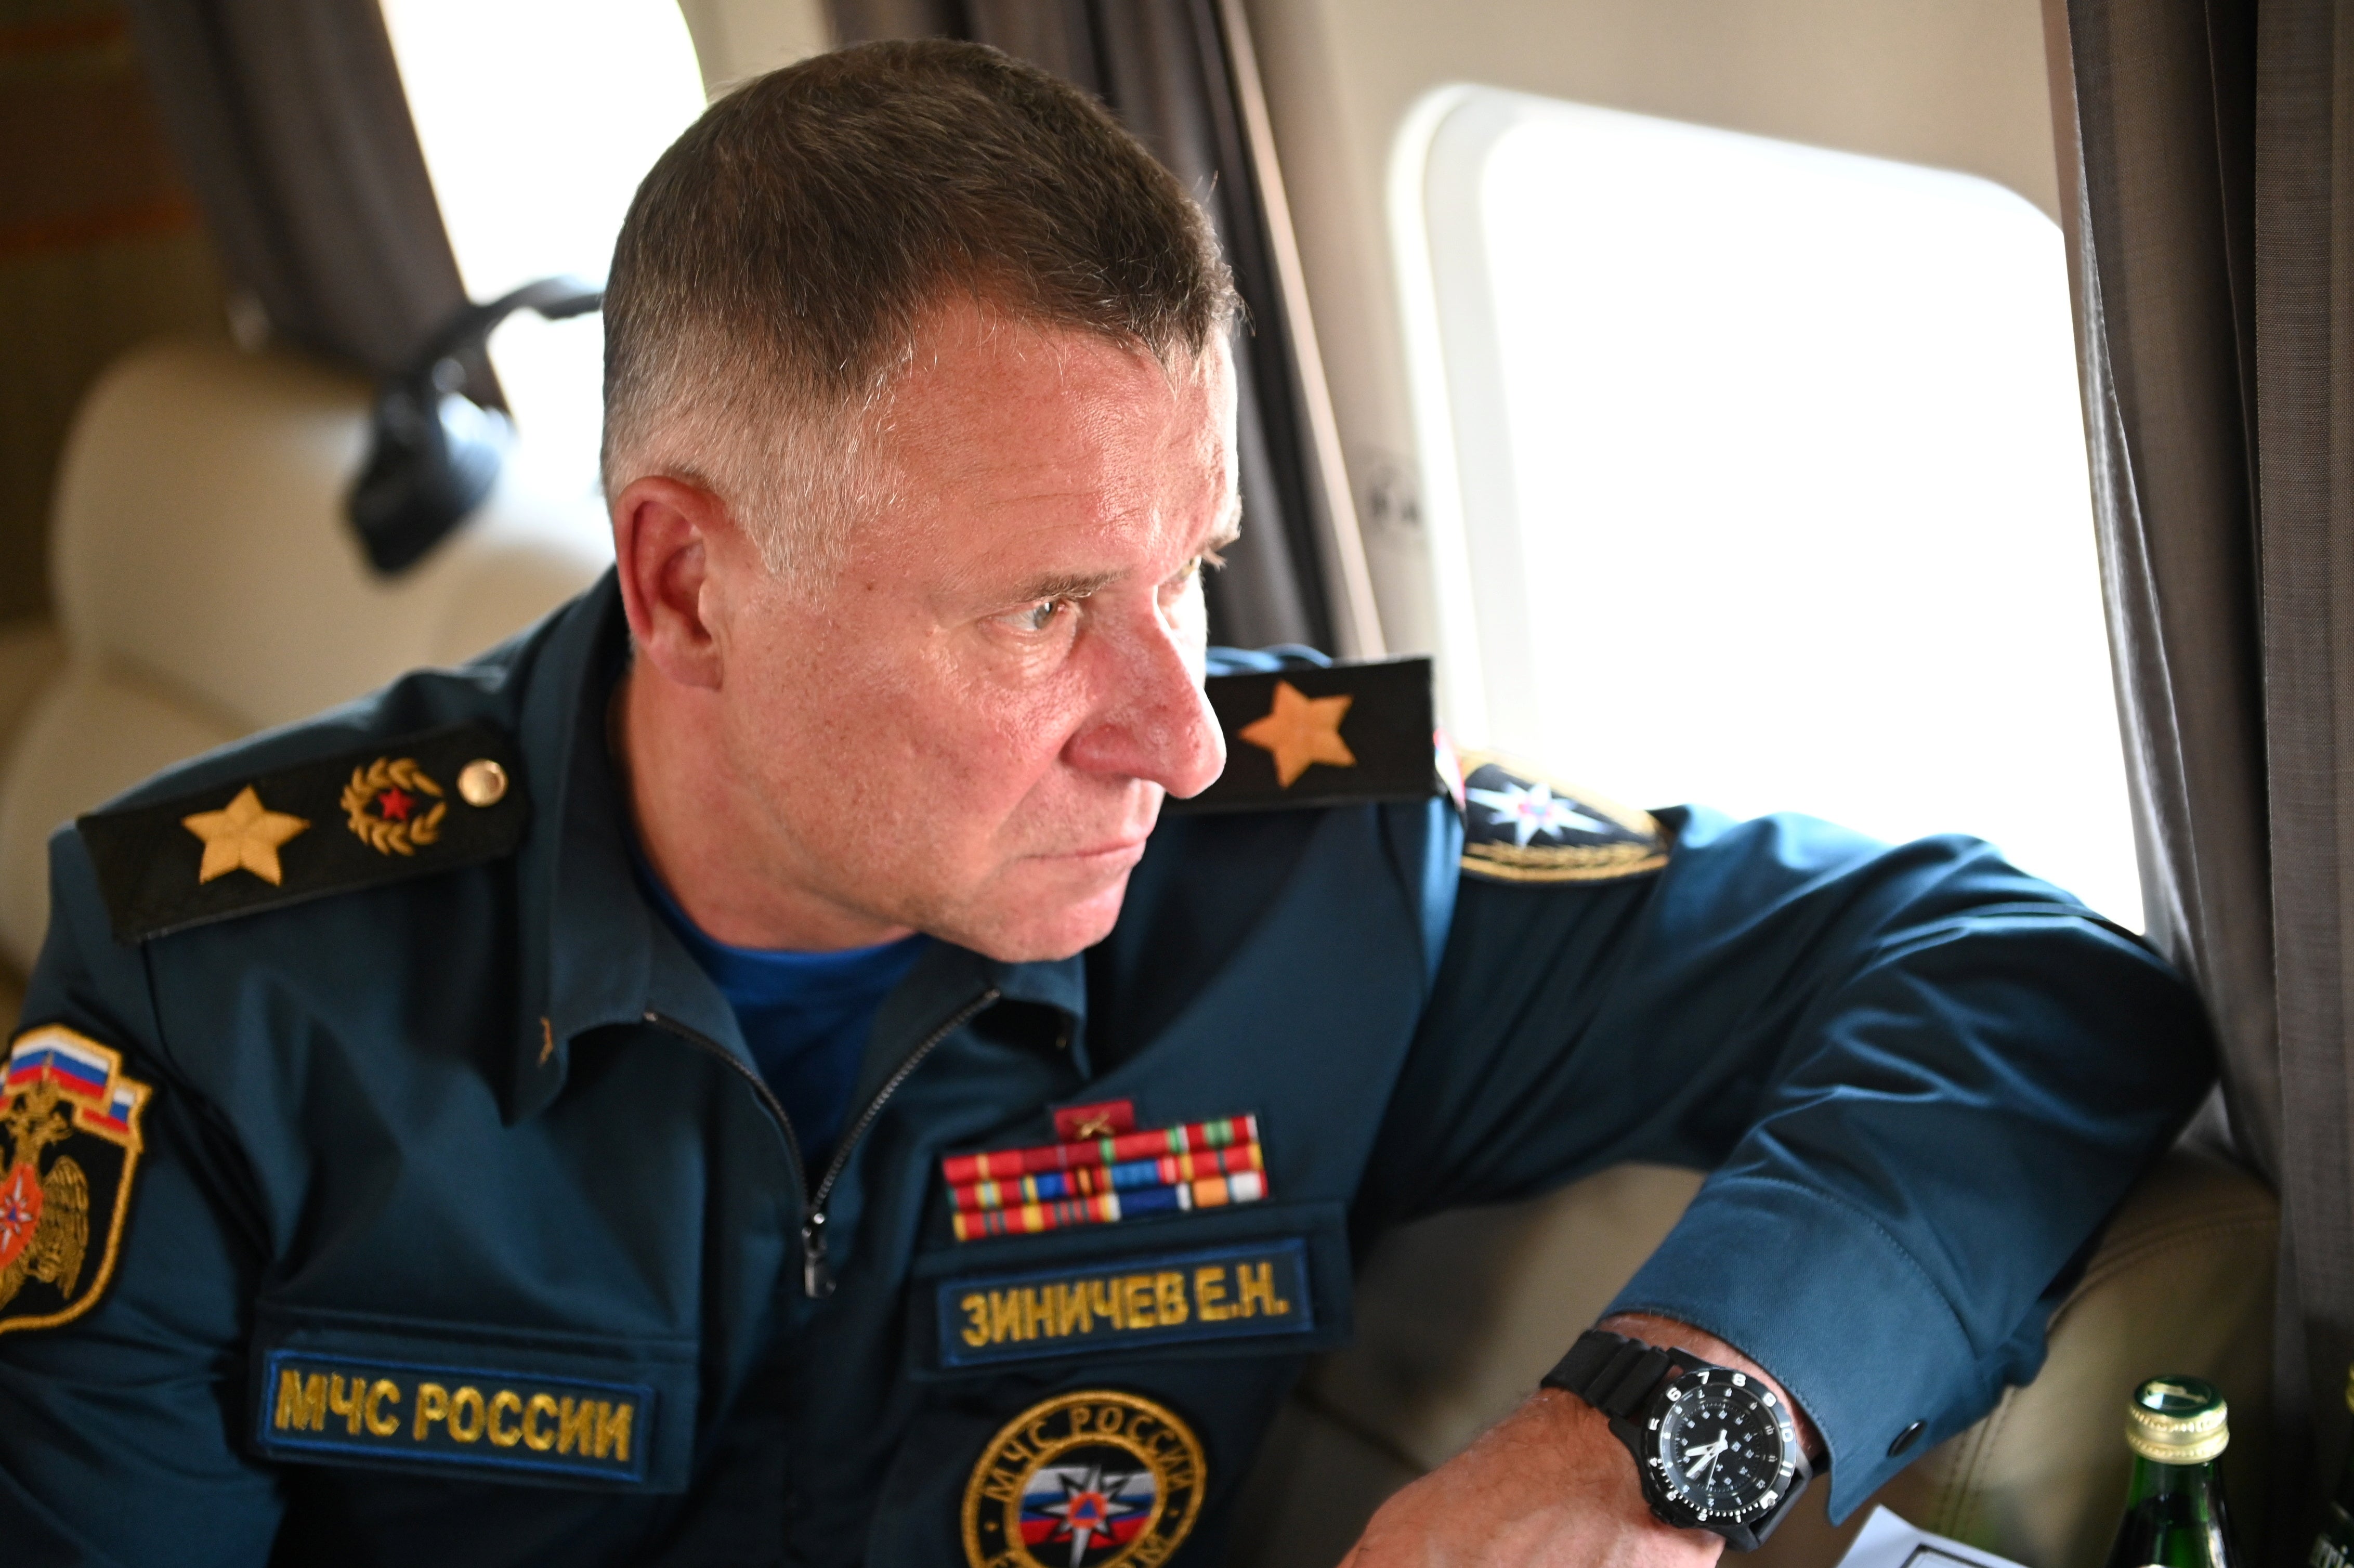 Russia’s emergencies minister Yevgeny Zinichev